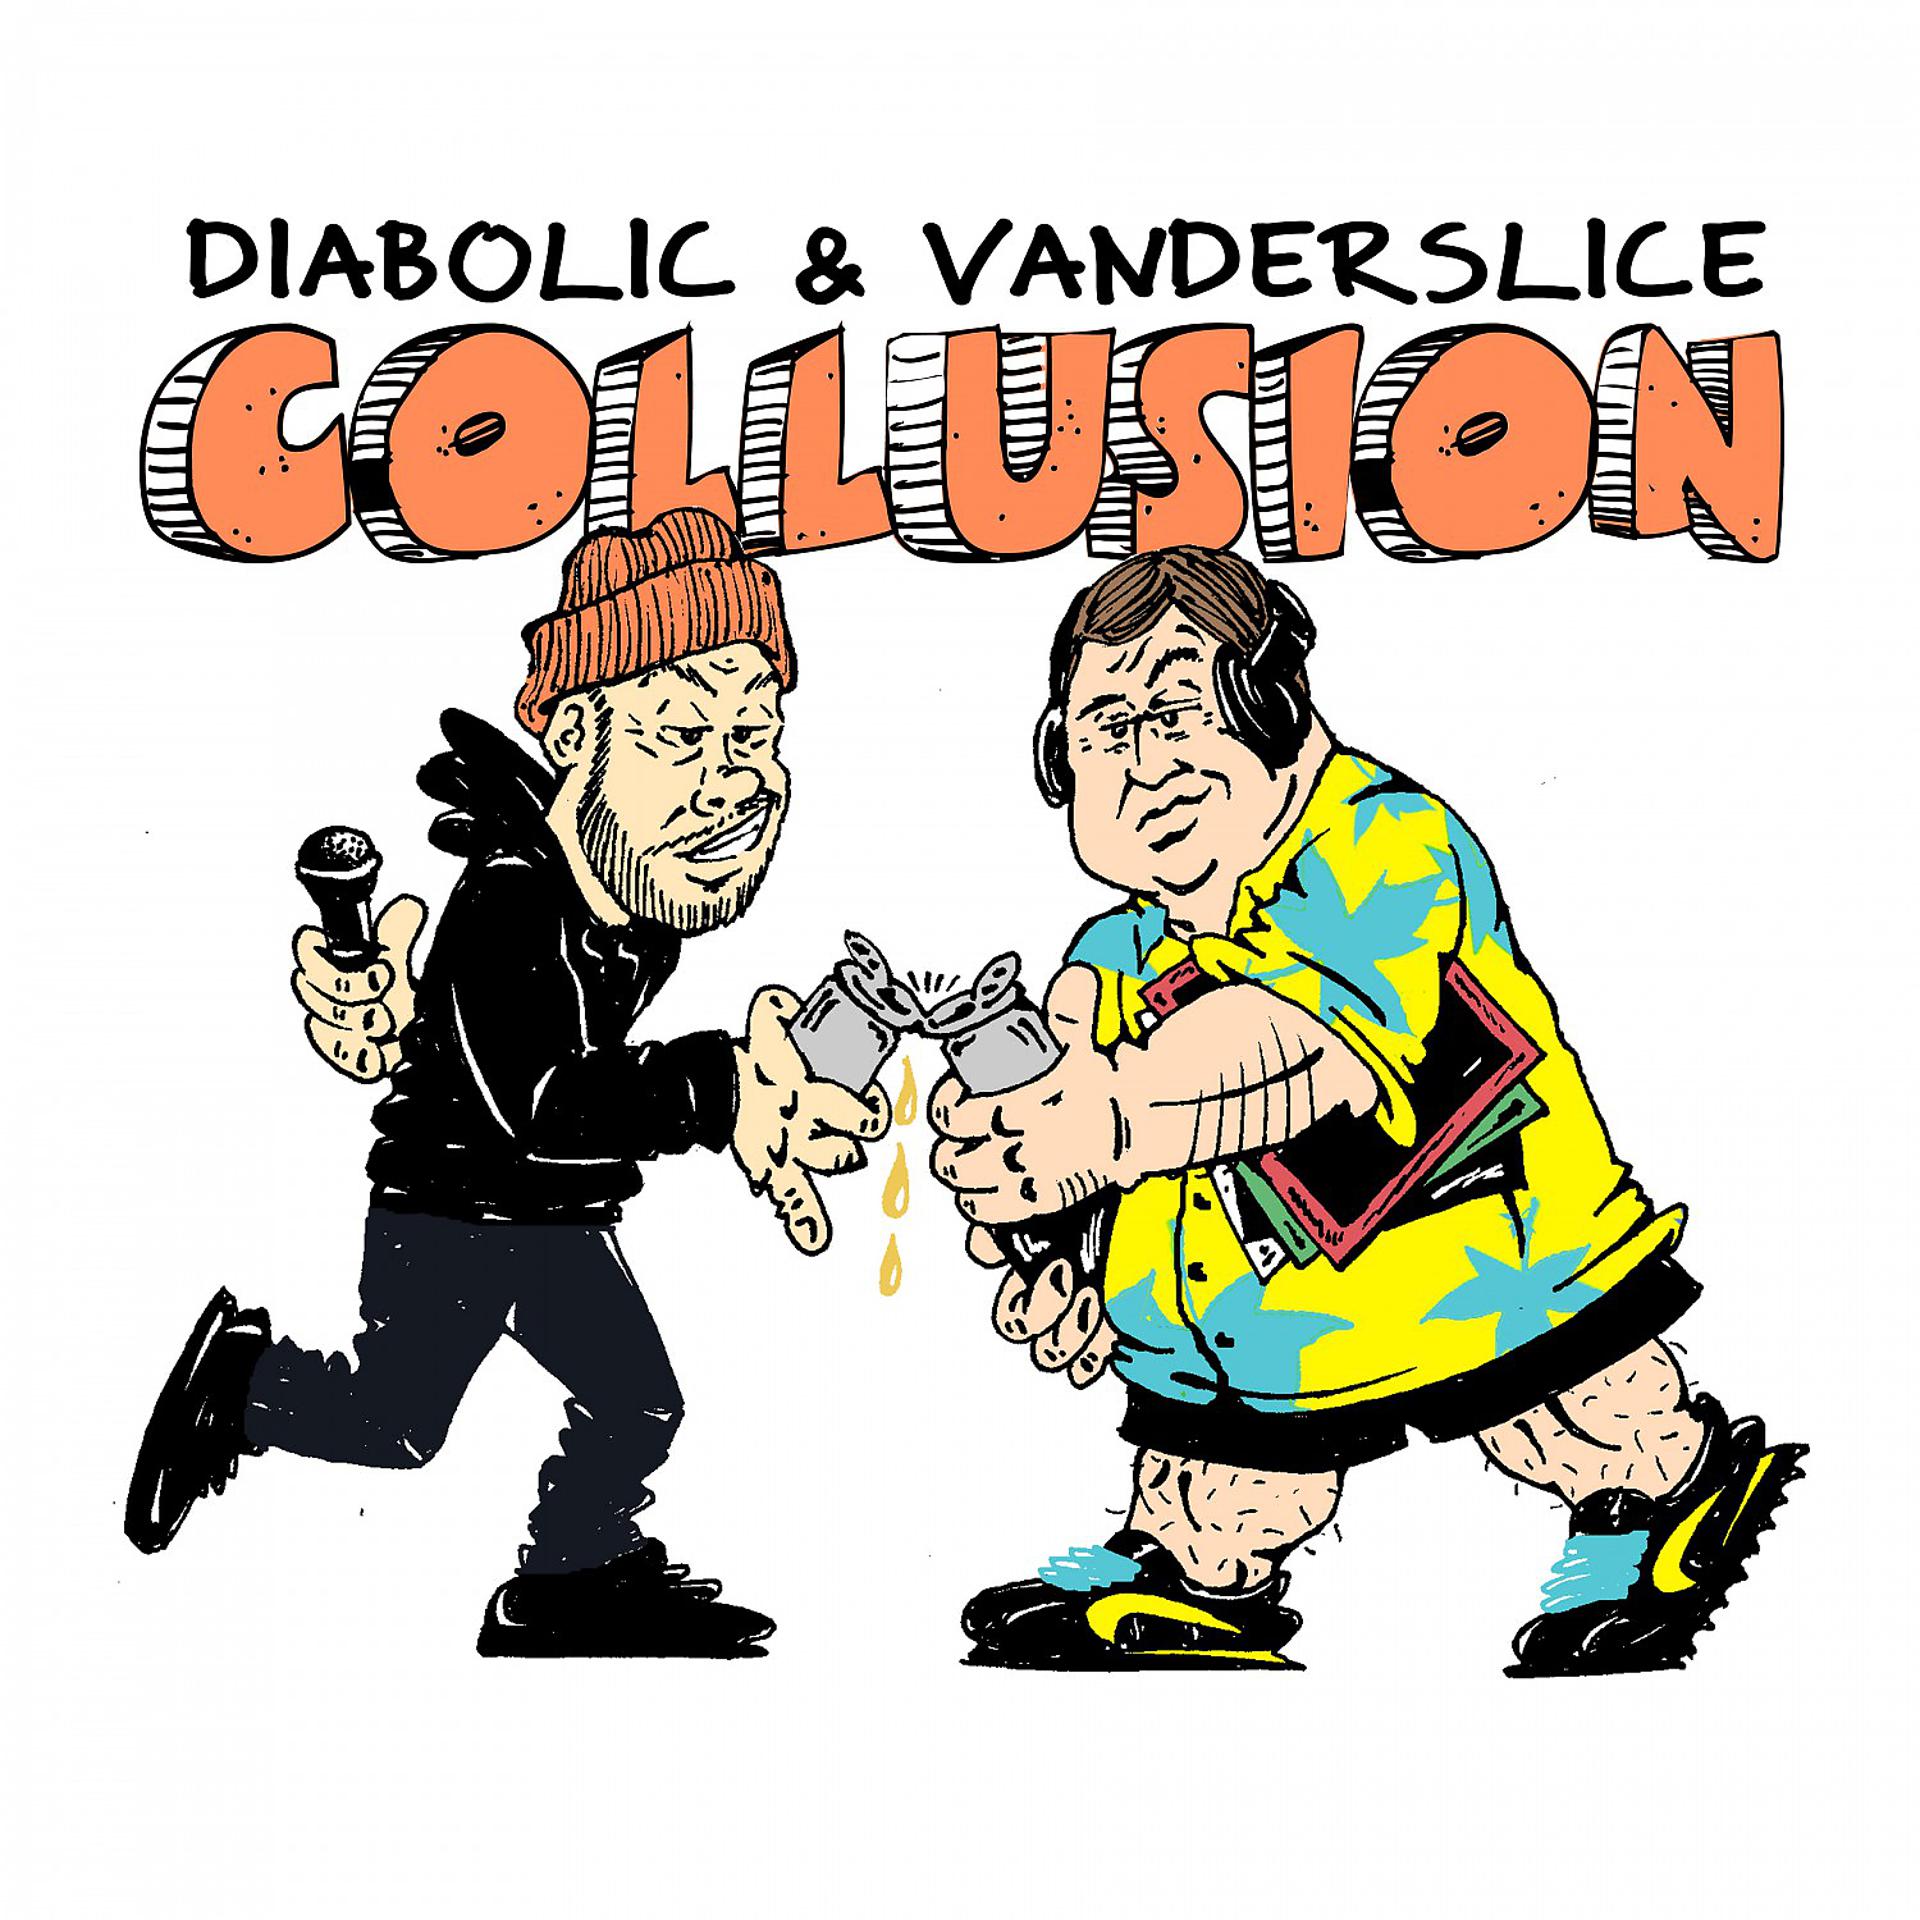 Постер альбома Collusion